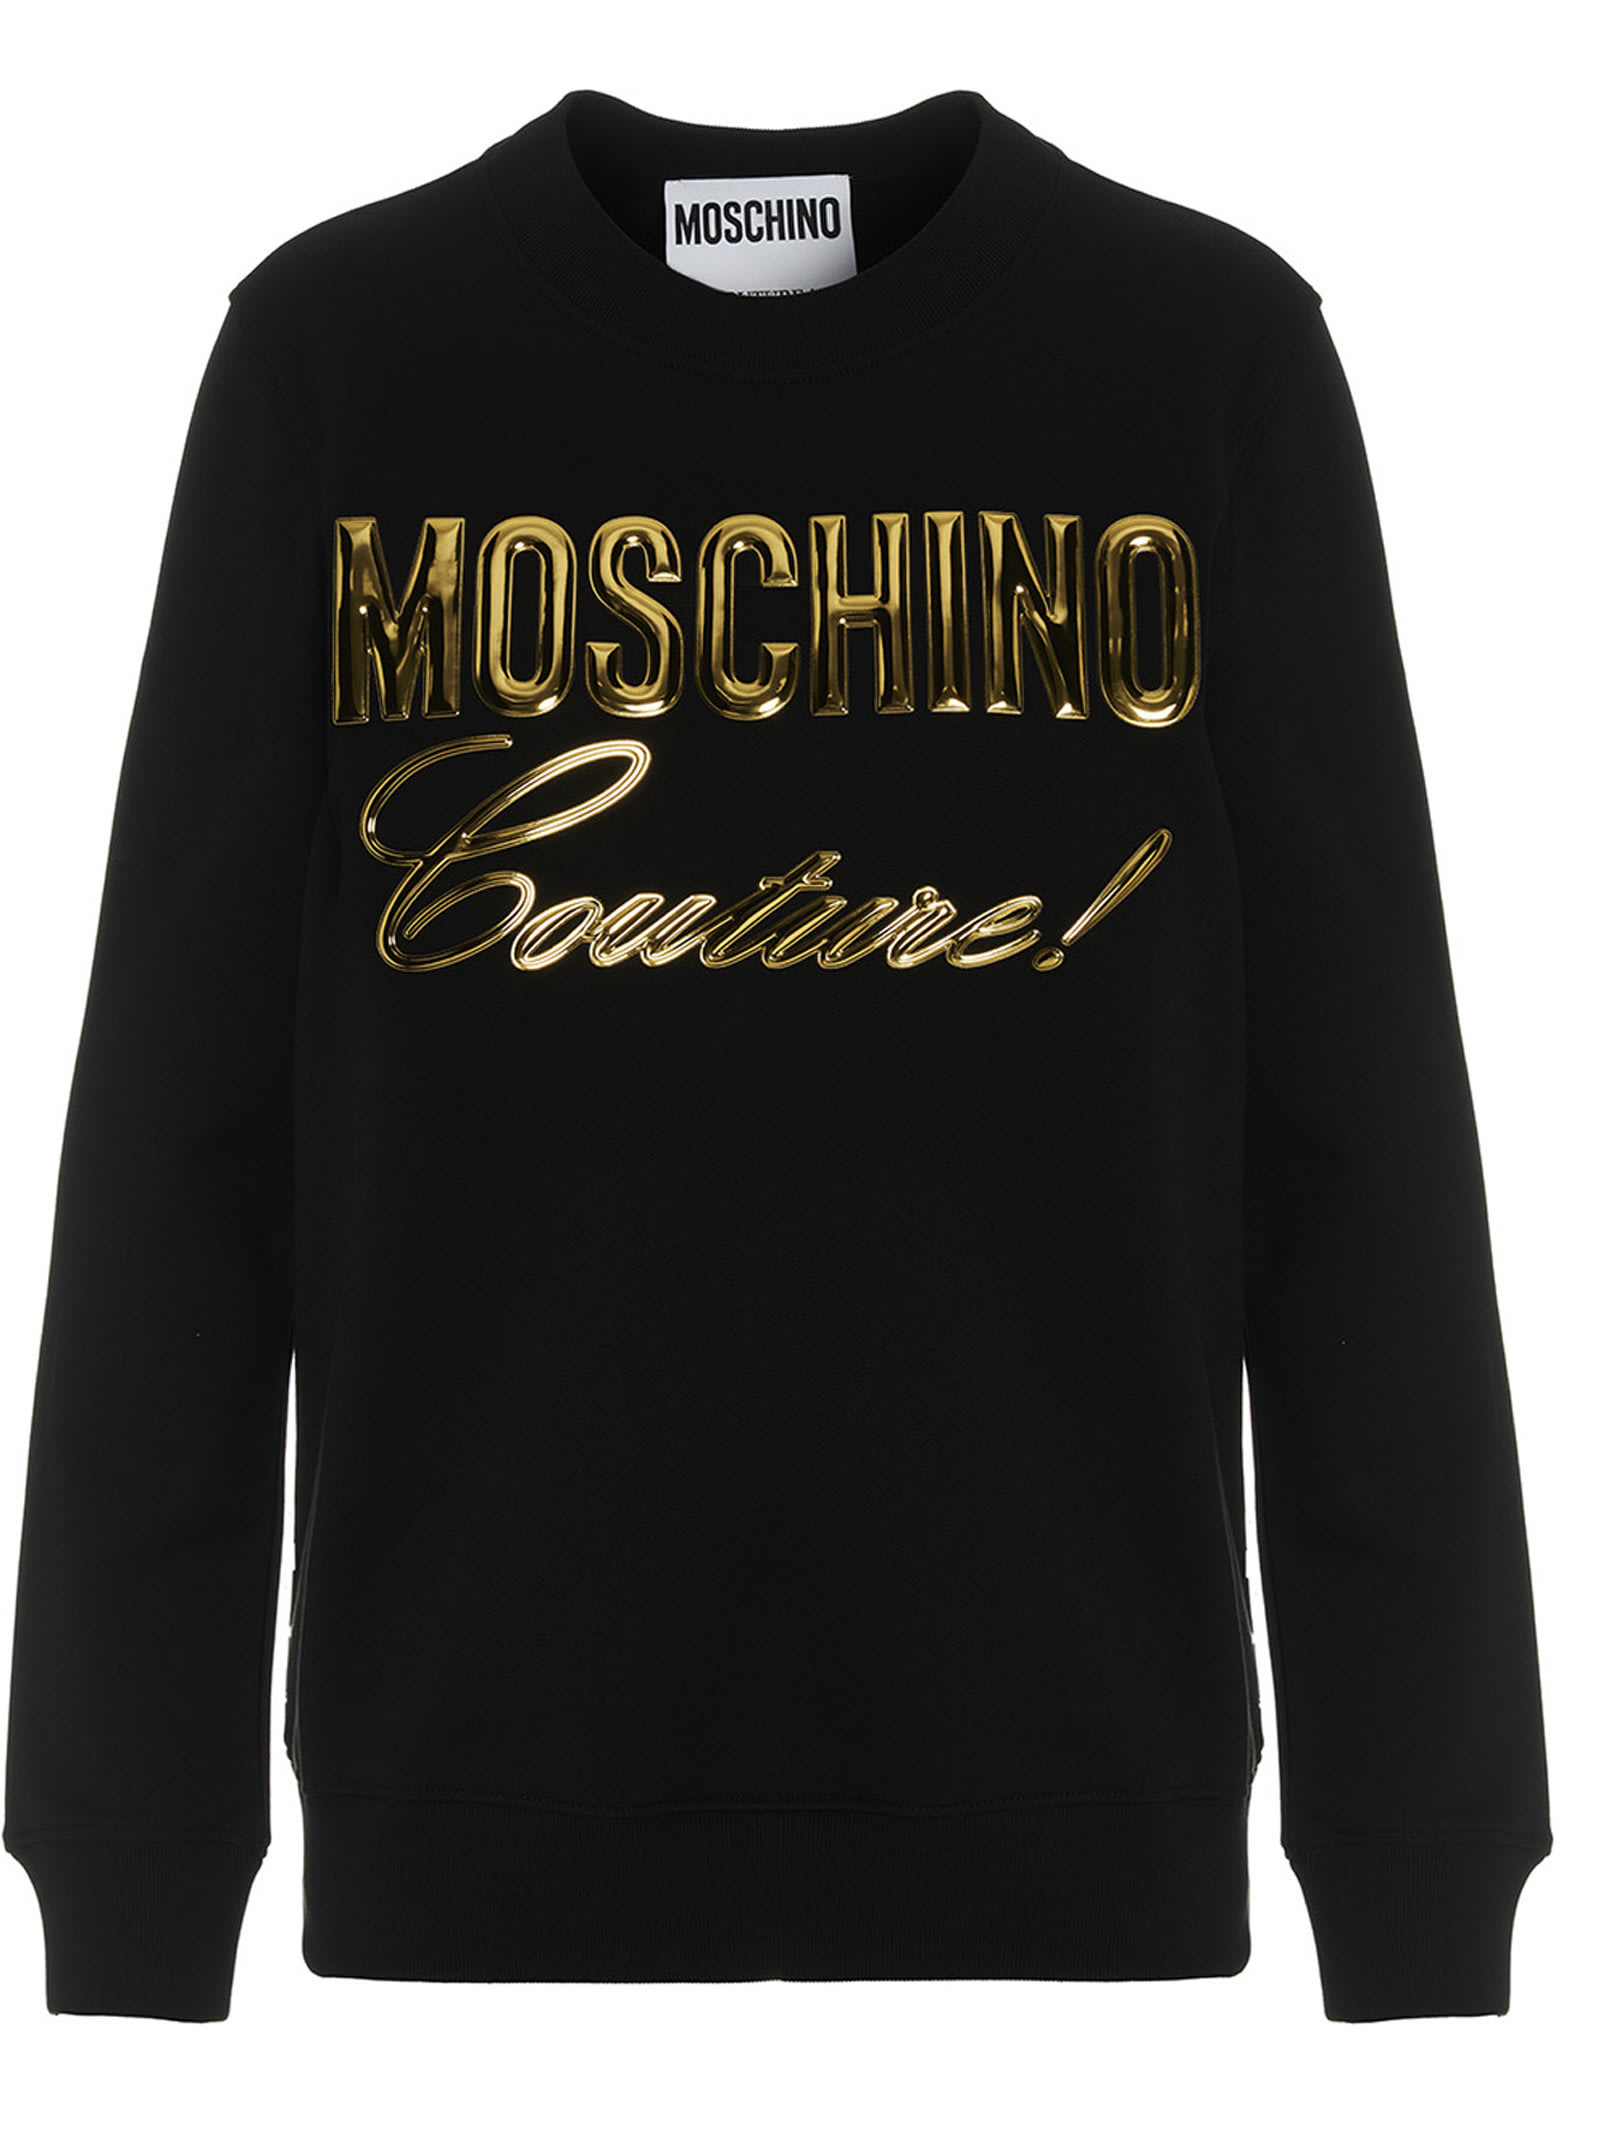 moschino Couture Sweatshirt